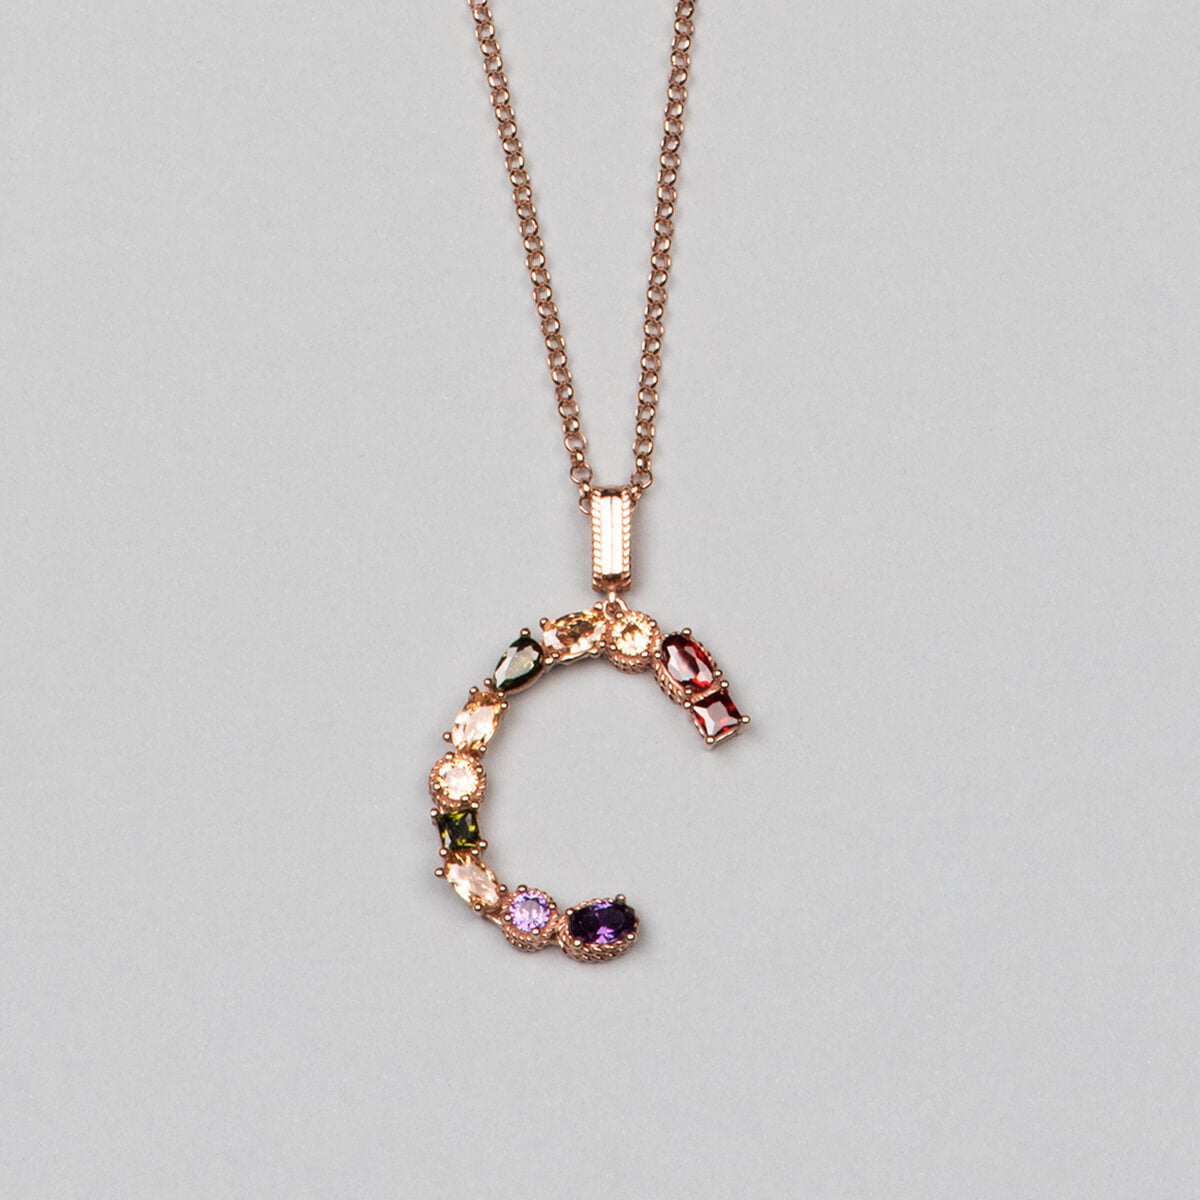 ‘C’ letter pendant necklace. 925 sterling silver, 18K rose gold plated.